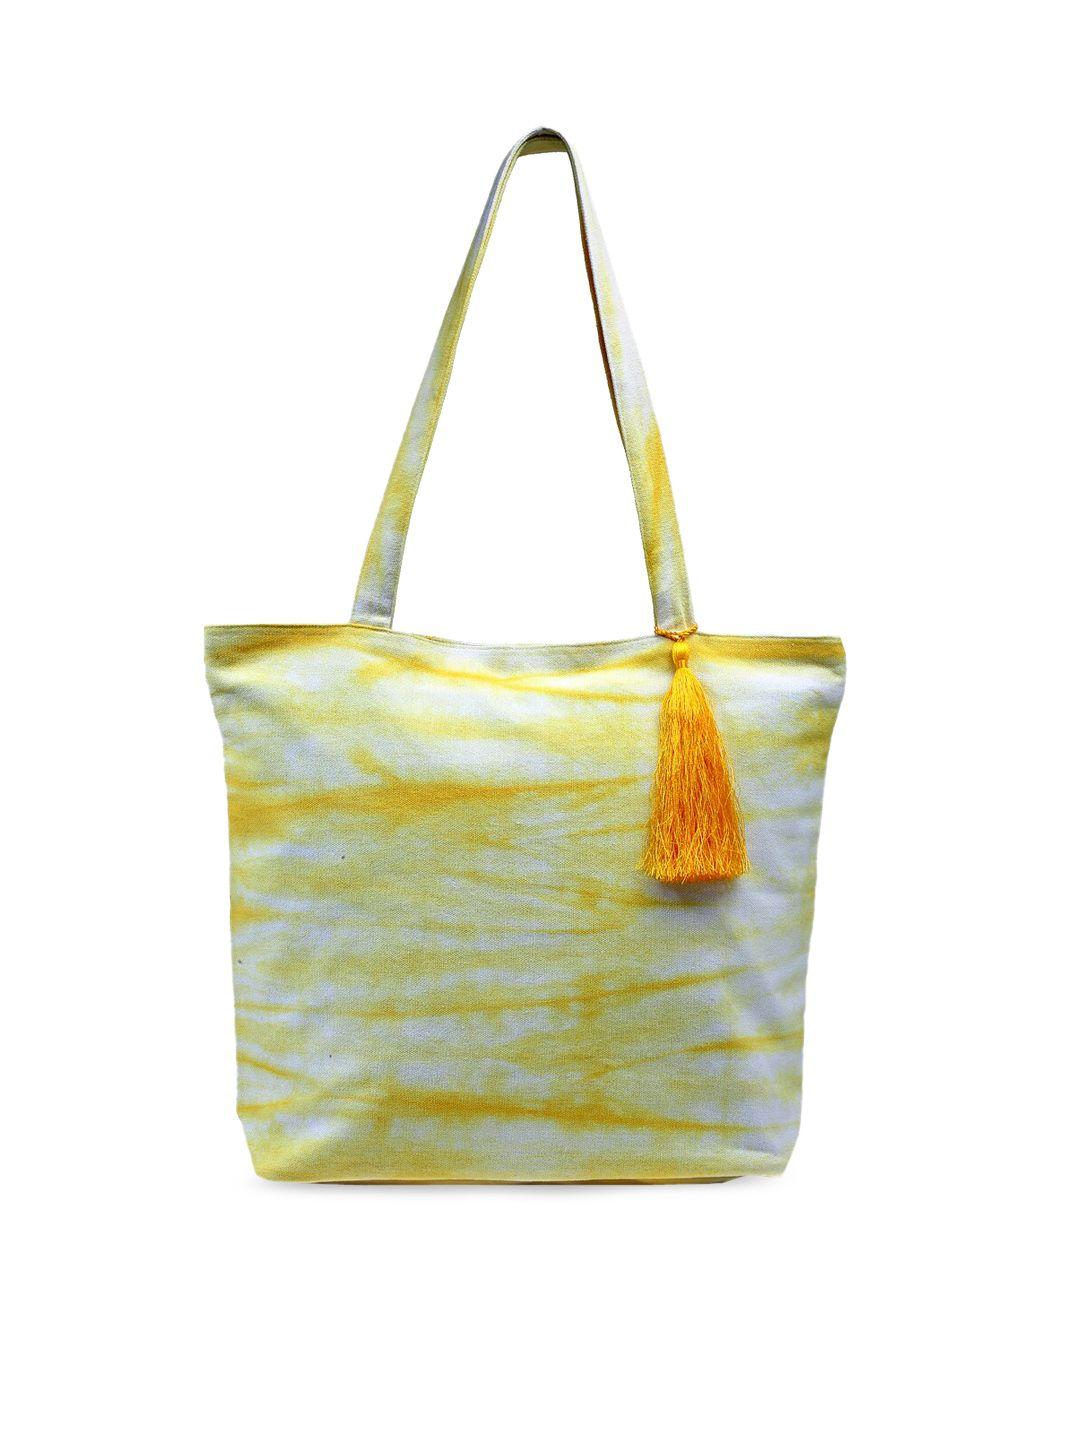 j style yellow & white printed shopper tote bag